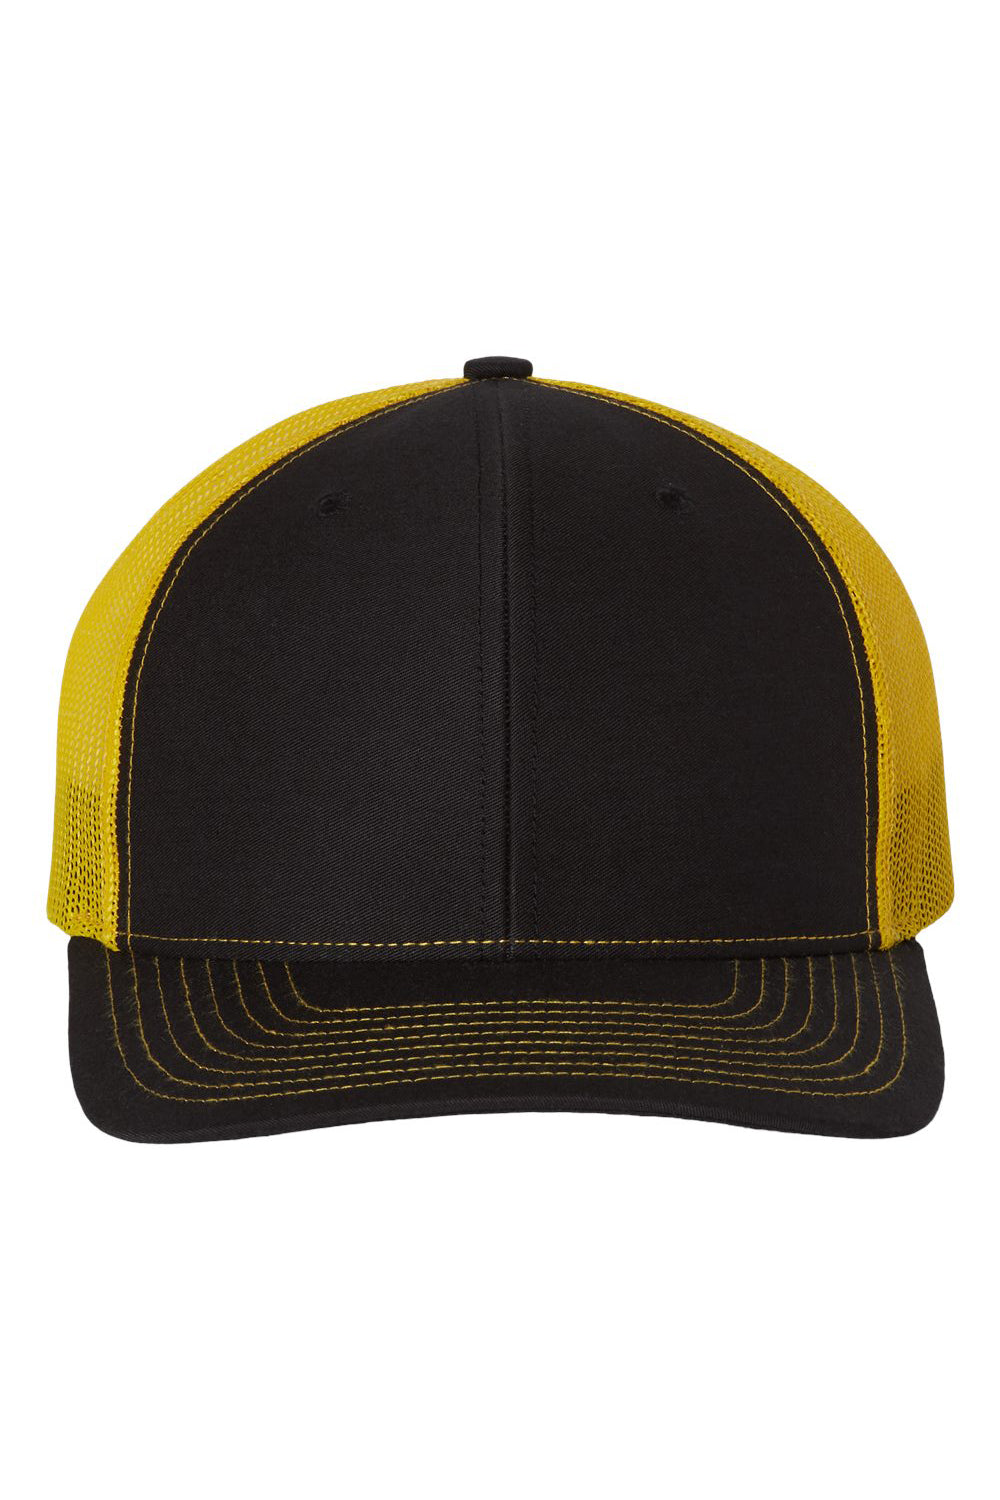 Richardson 112 Mens Snapback Trucker Hat Black/Yellow Flat Front